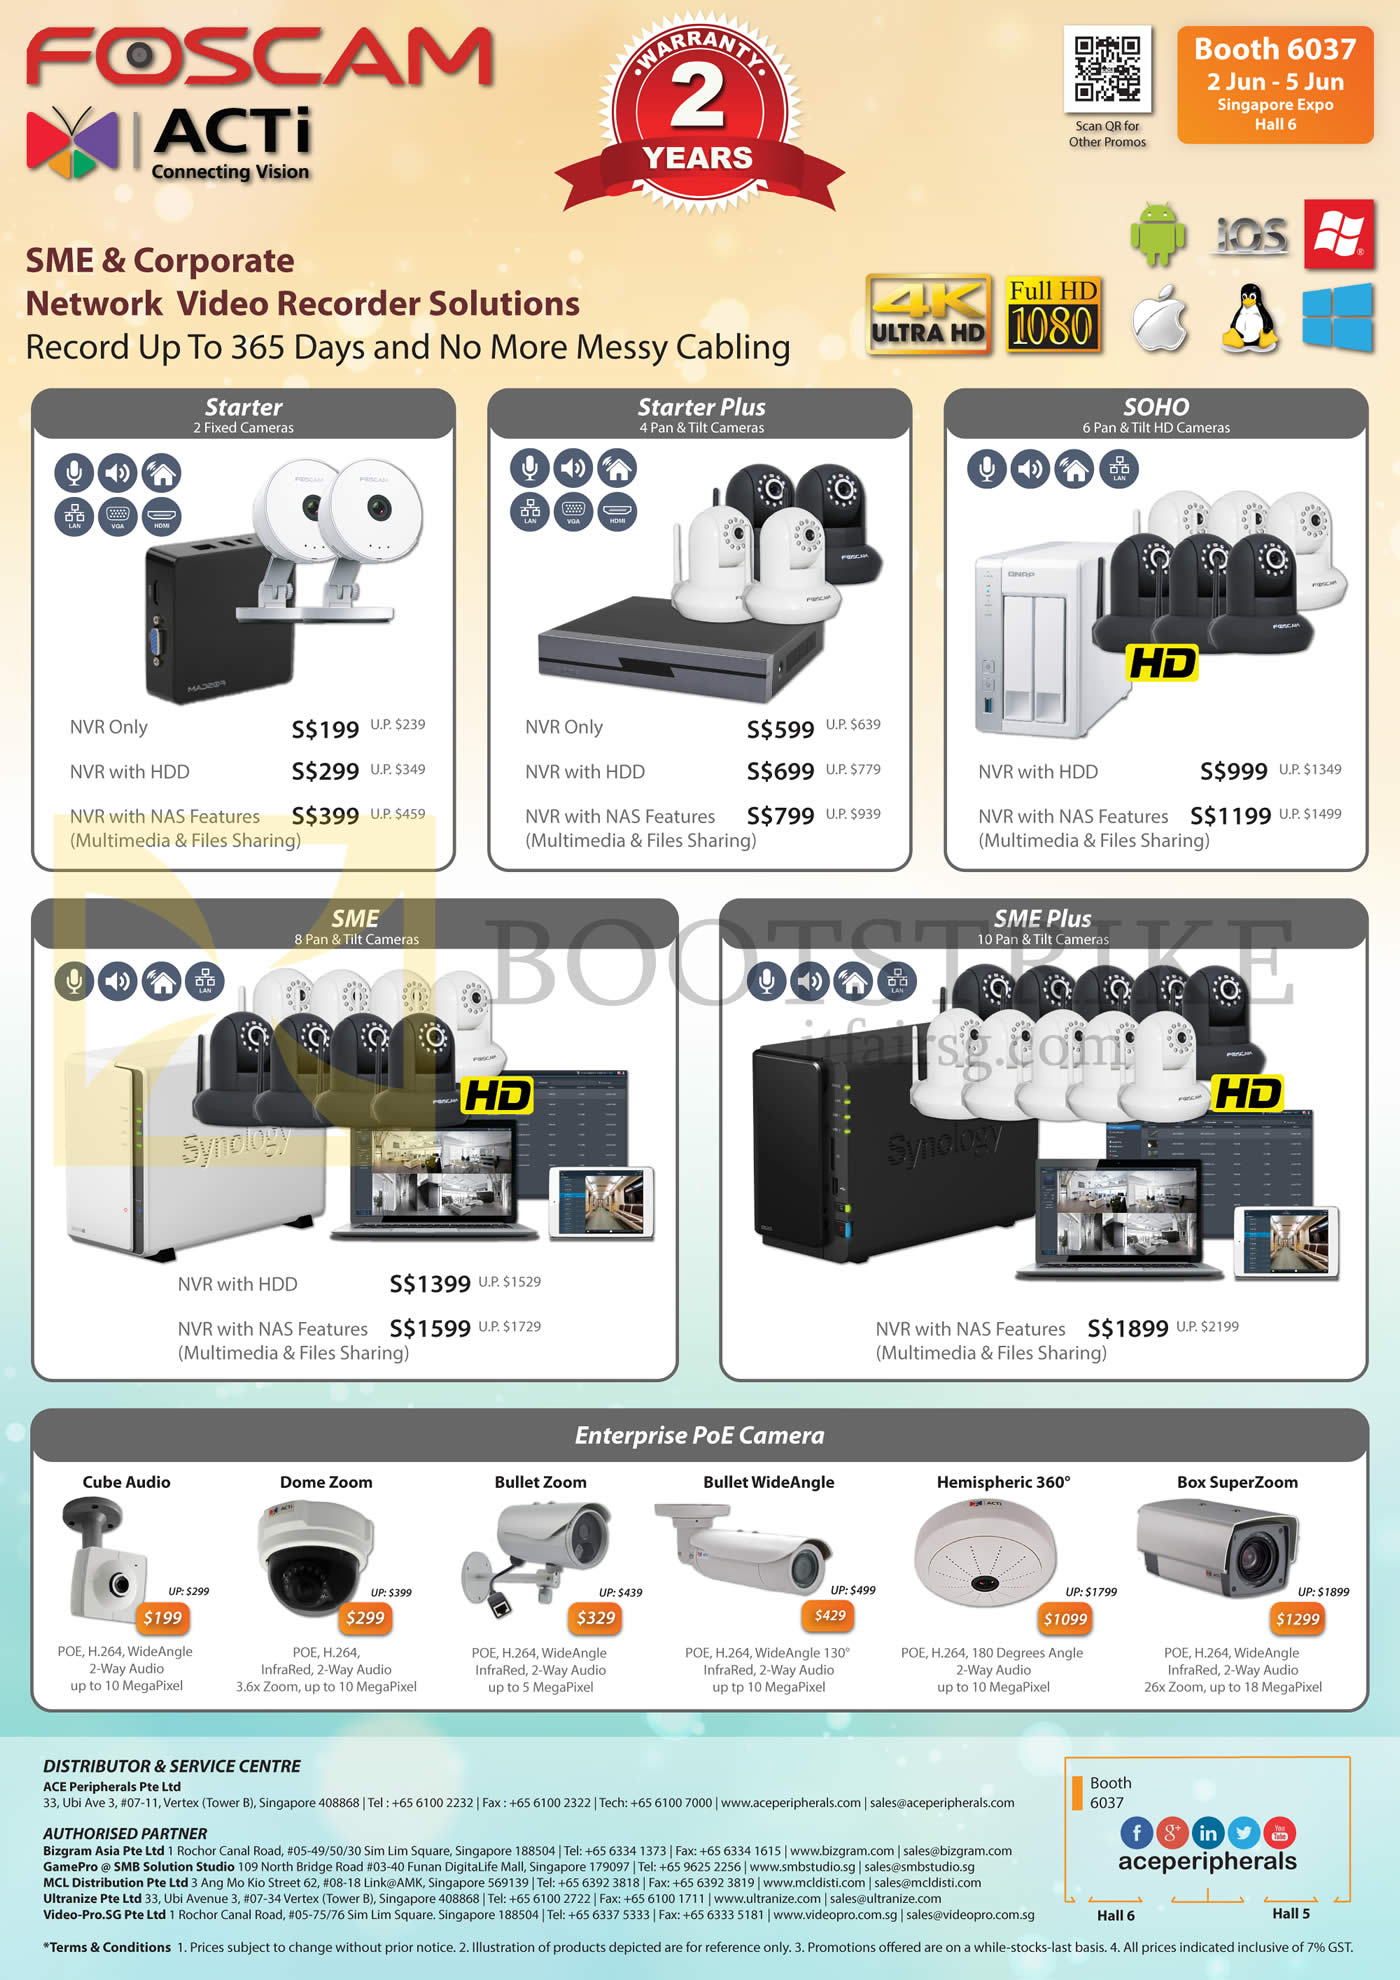 PC SHOW 2016 price list image brochure of ACE Peripherals Foscam Cameras Starter, Starter Plus, Soho, SME, SME Plus, Enterprise POE Cameras